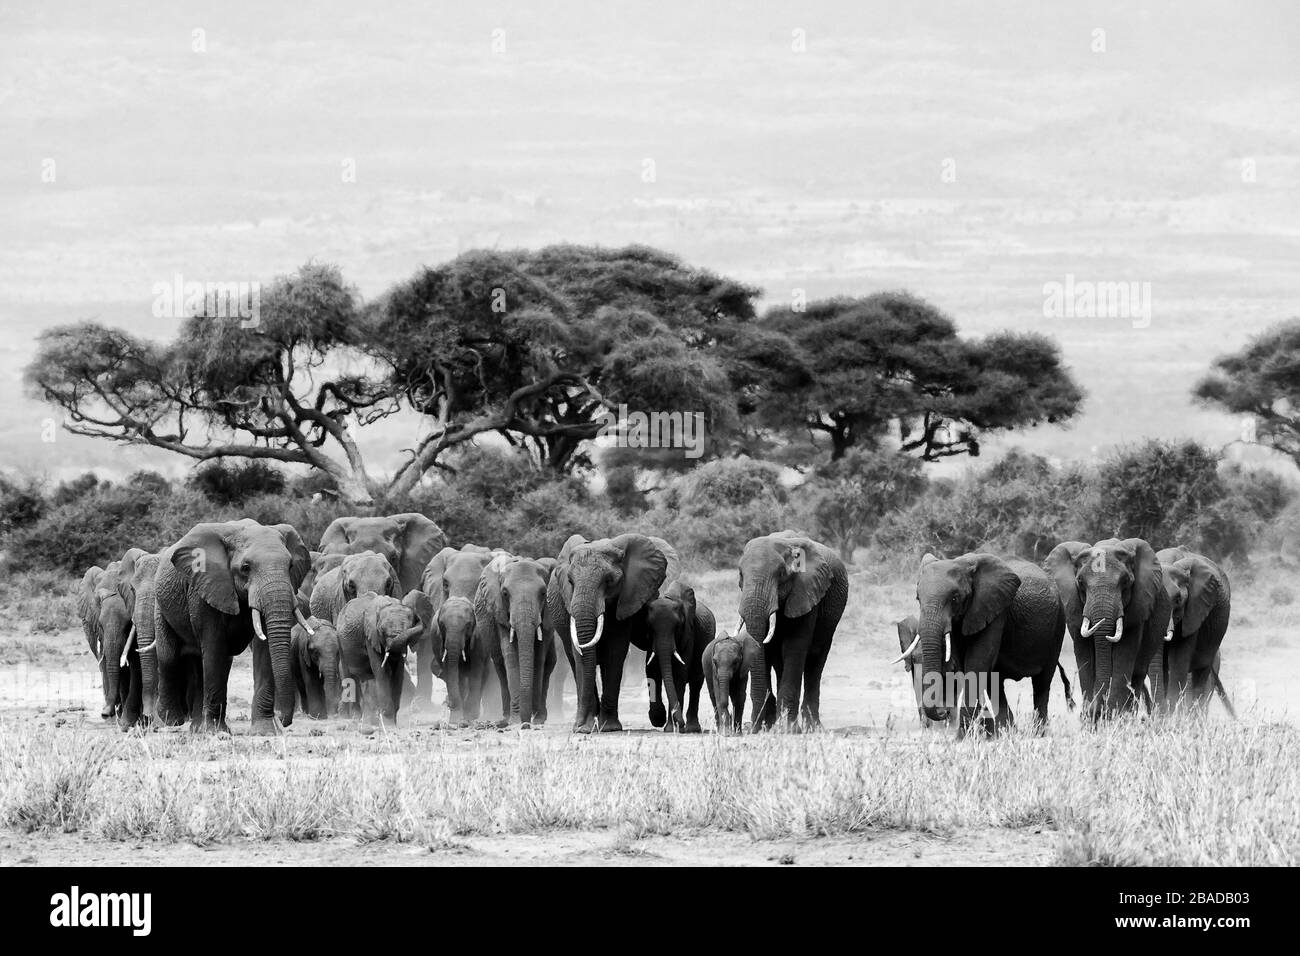 The image of African elephant (Loxodonta africana) herd in Amboseli national park, Kenya Stock Photo